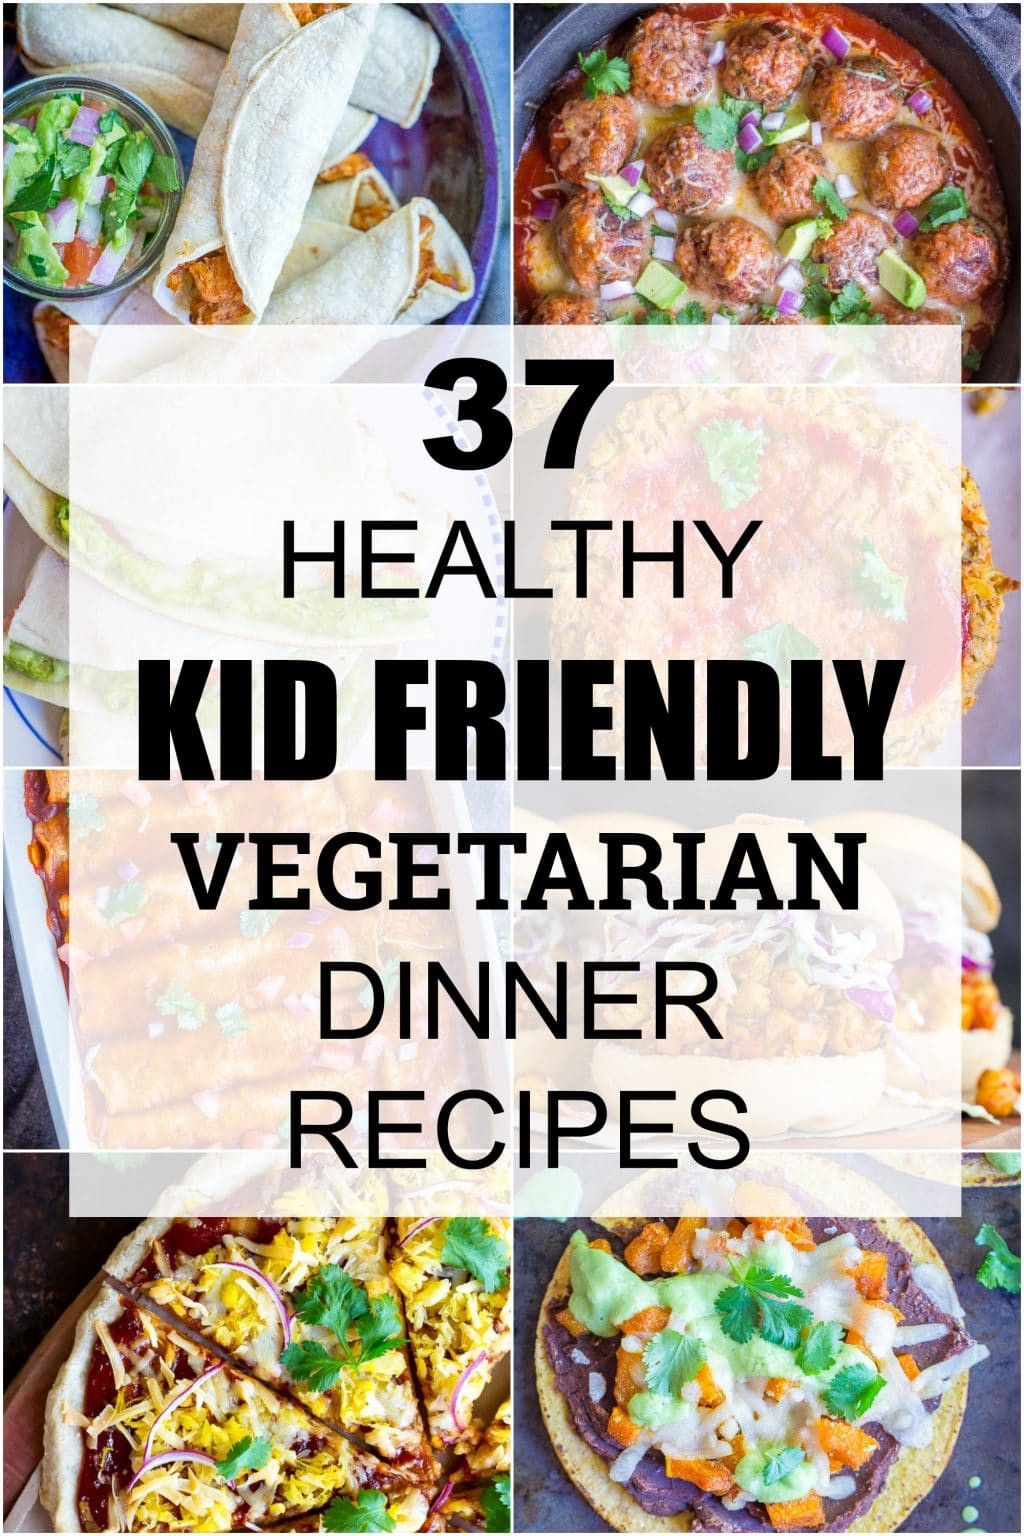 Vegetarian Dinner Ideas
 37 Healthy Kid Friendly Ve arian Dinner Recipes She